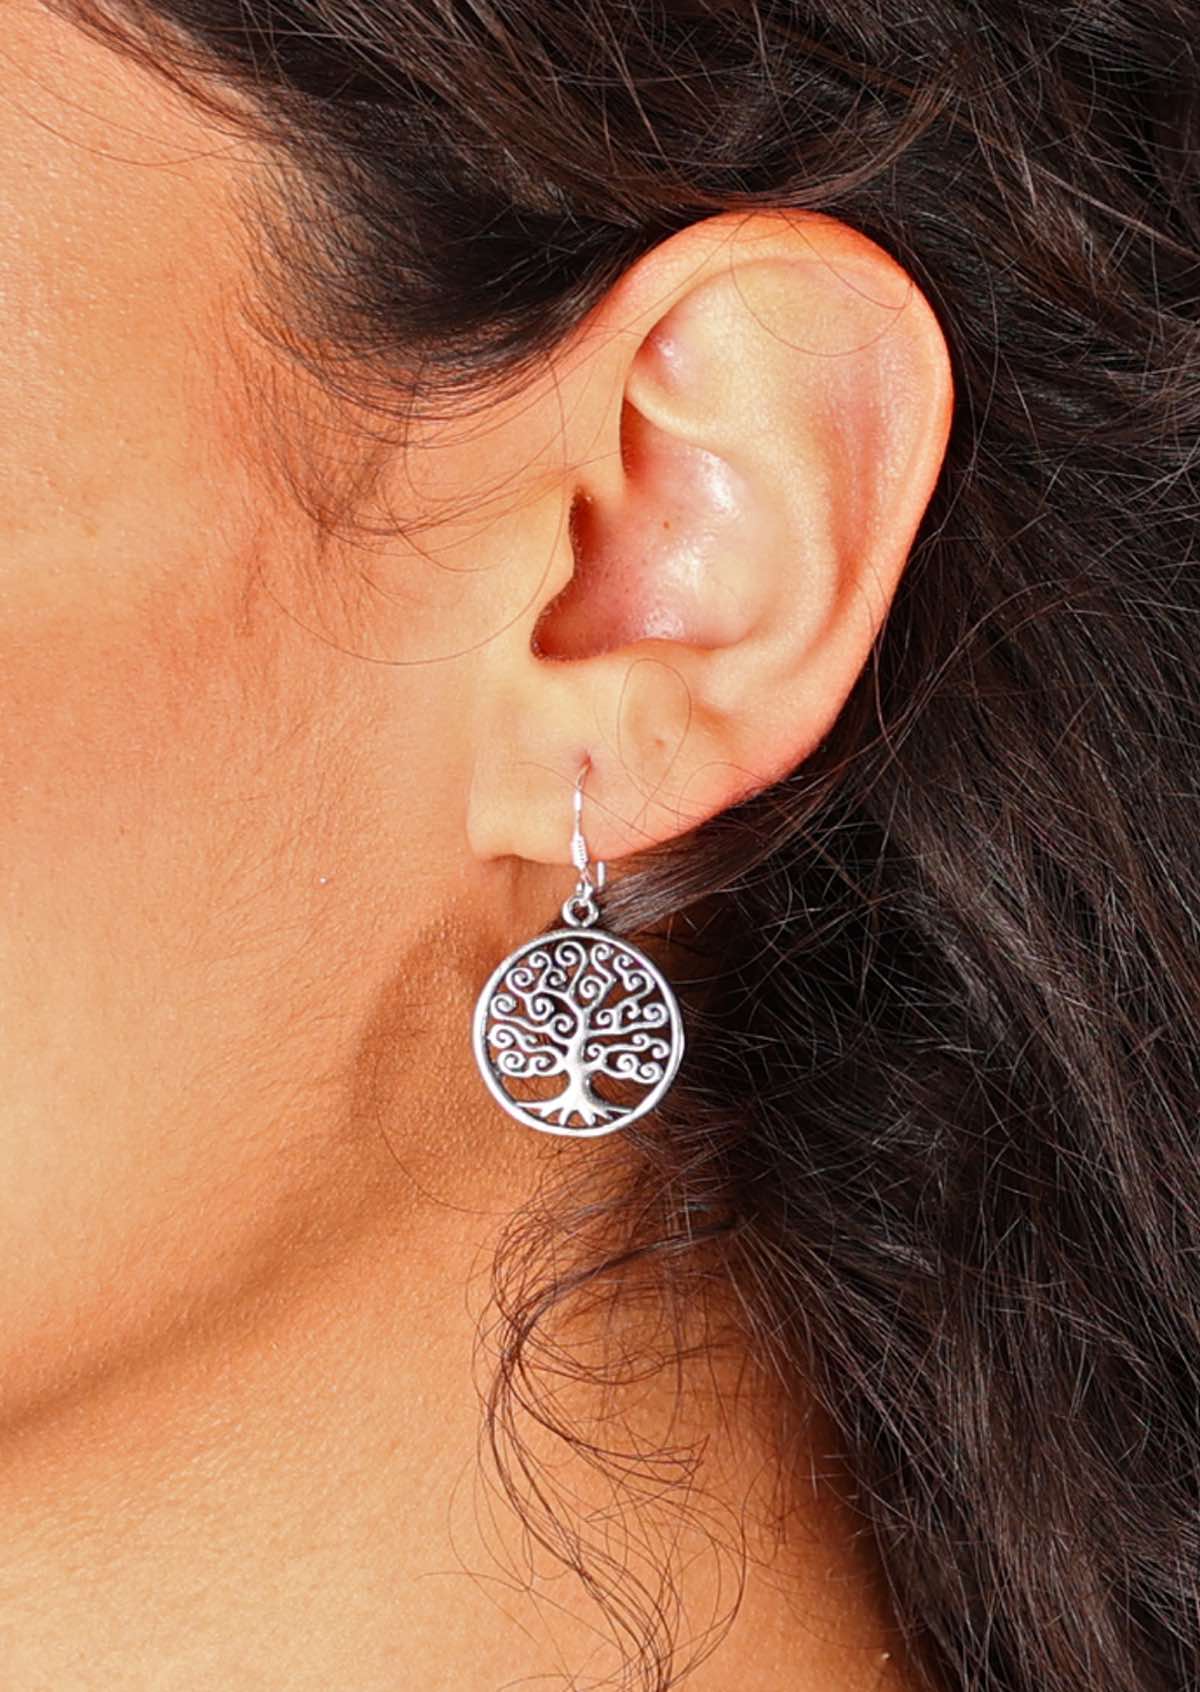 19mm diameter silver earrings suspended from hook